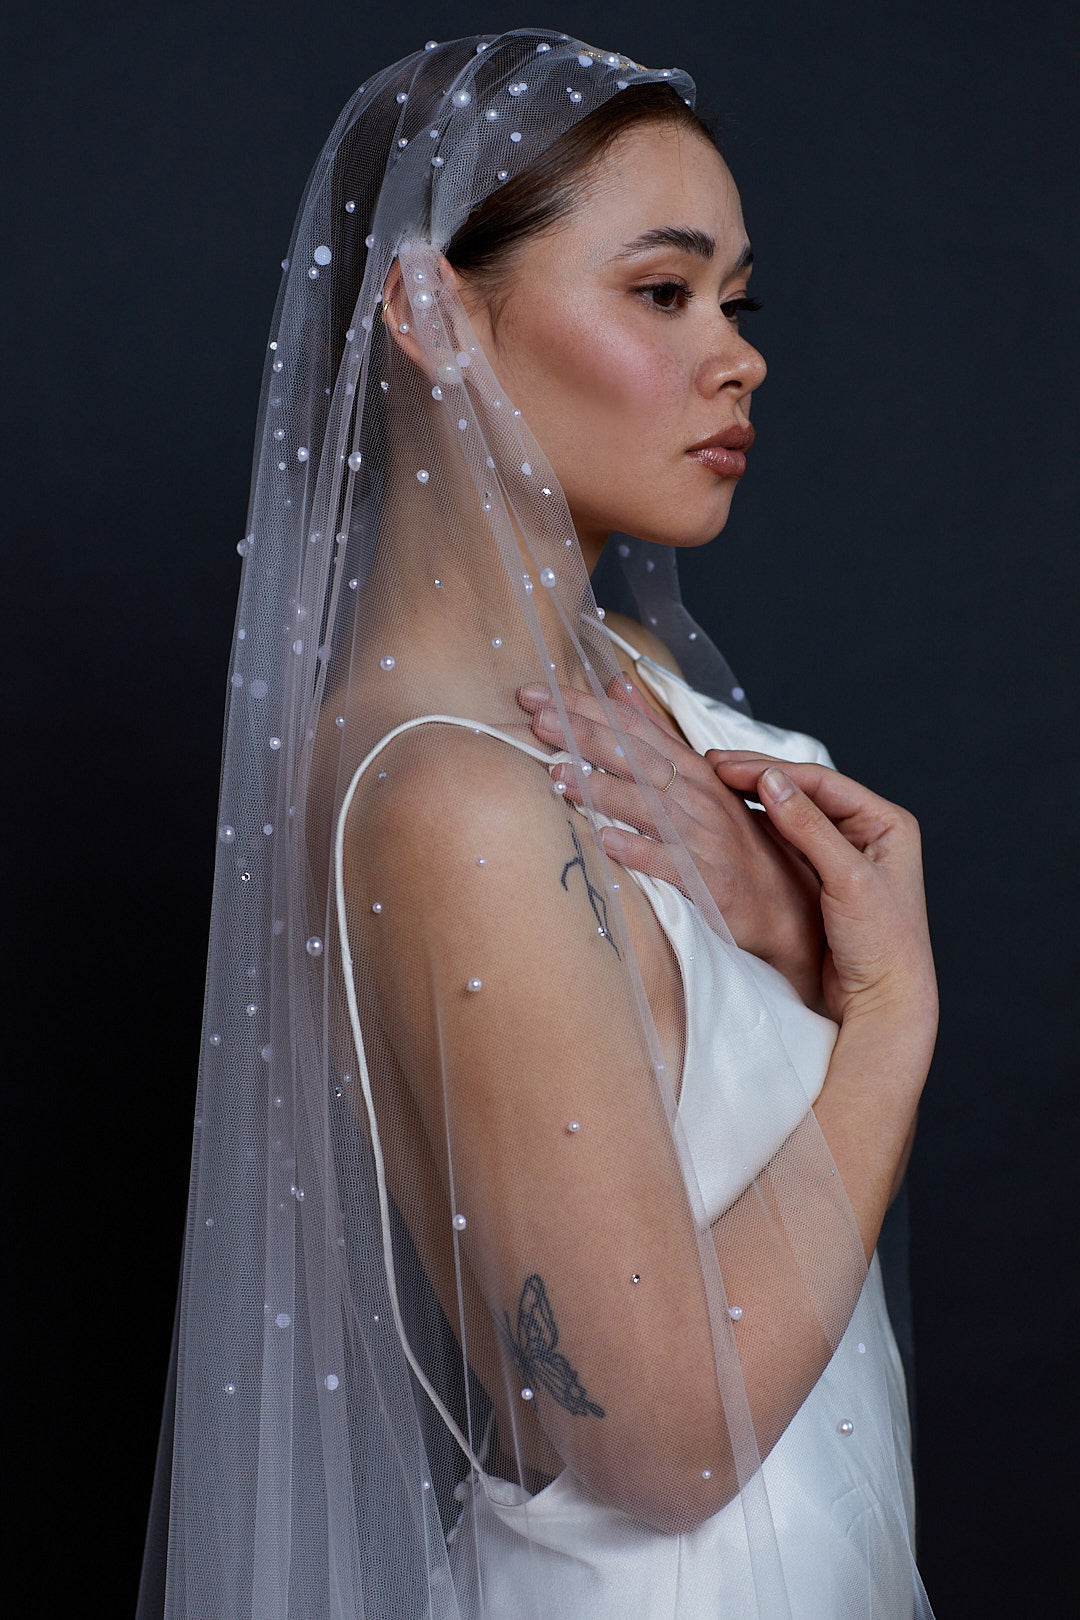 AUGUSTINE | Juliet cap veil with flowers